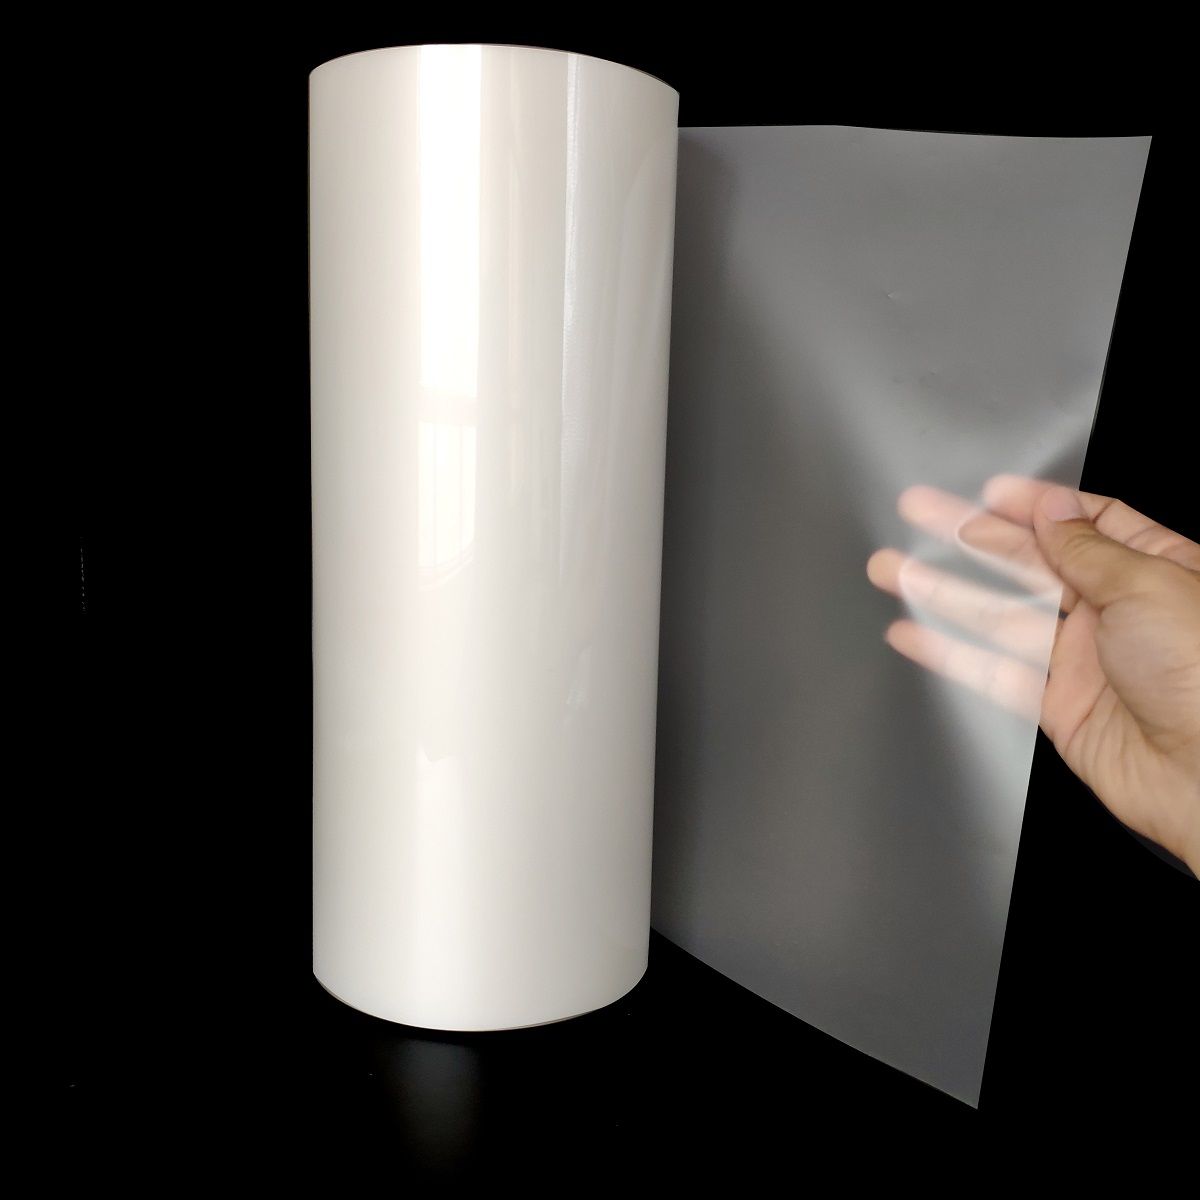 PET Thermal lamination film